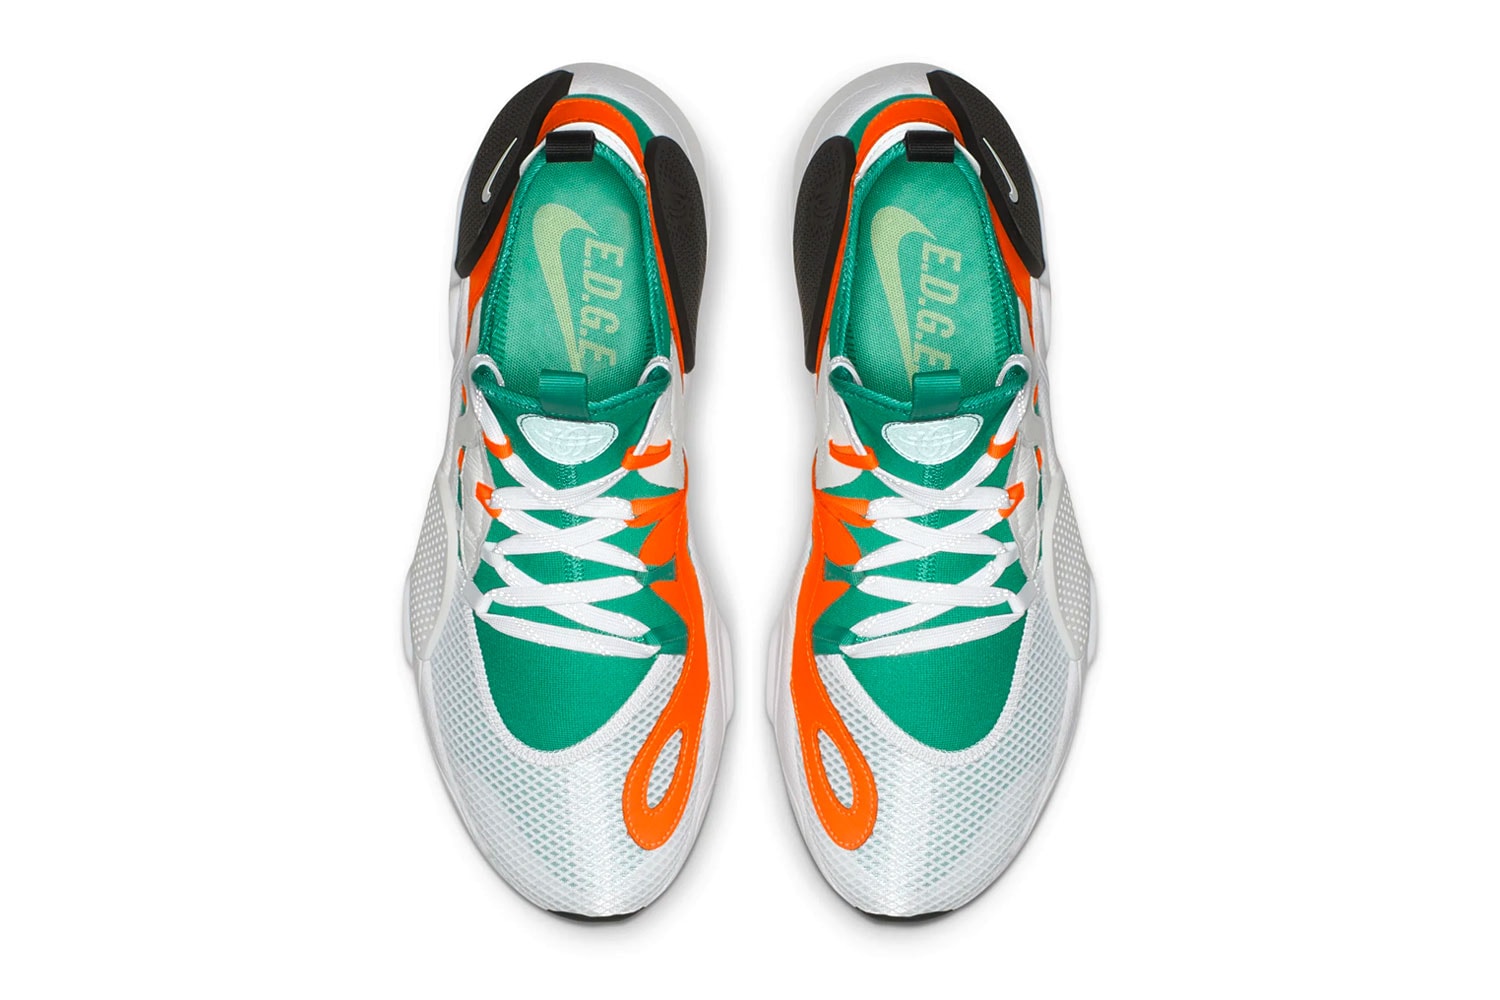 Nike Huarache E.D.G.E. TXT White Clear Emerald Total Orange Indigo Force Black First Look Release Info Date Tinker Hatfield Air